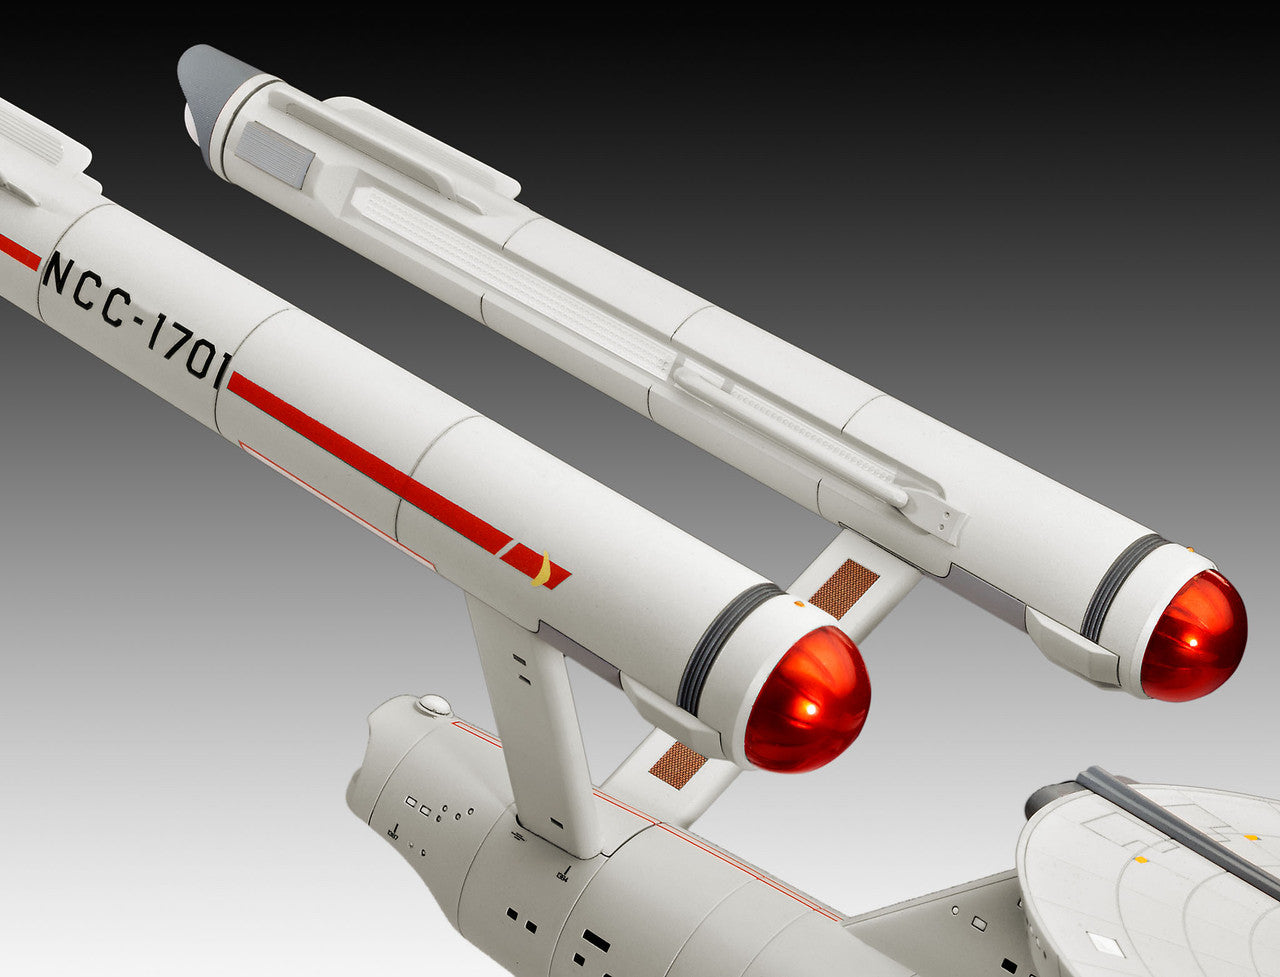 Star Trek U.S.S. Enterprise NCC-1701 (TOS) - Loaded Dice